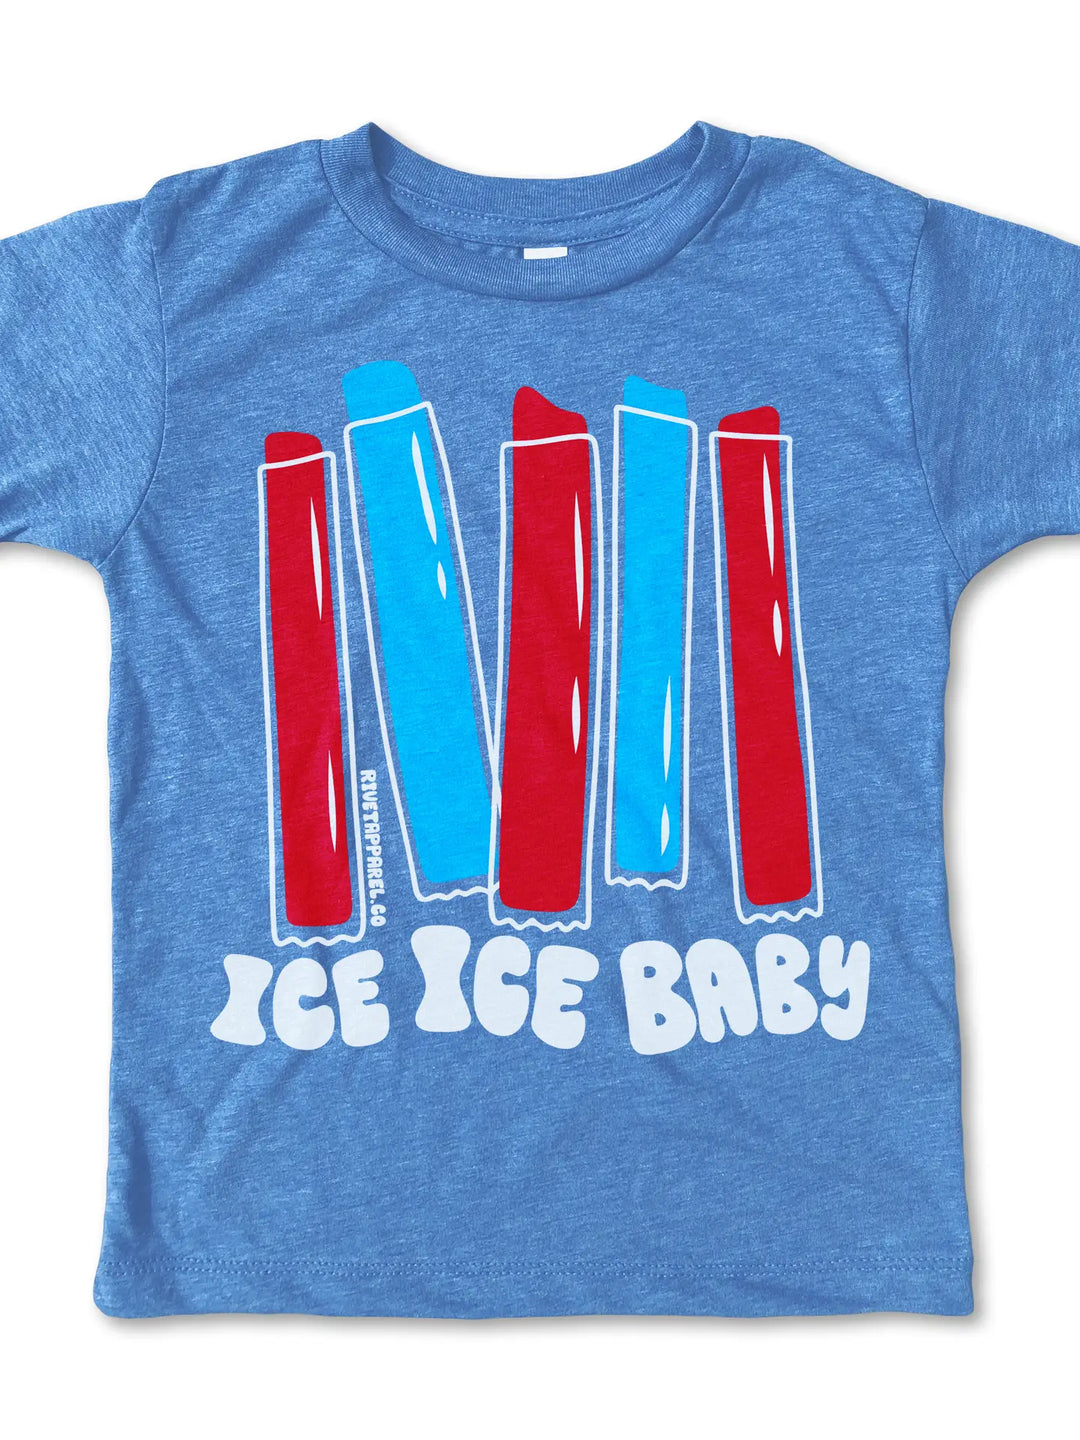 Rivet Kids Ice Ice Baby Tee